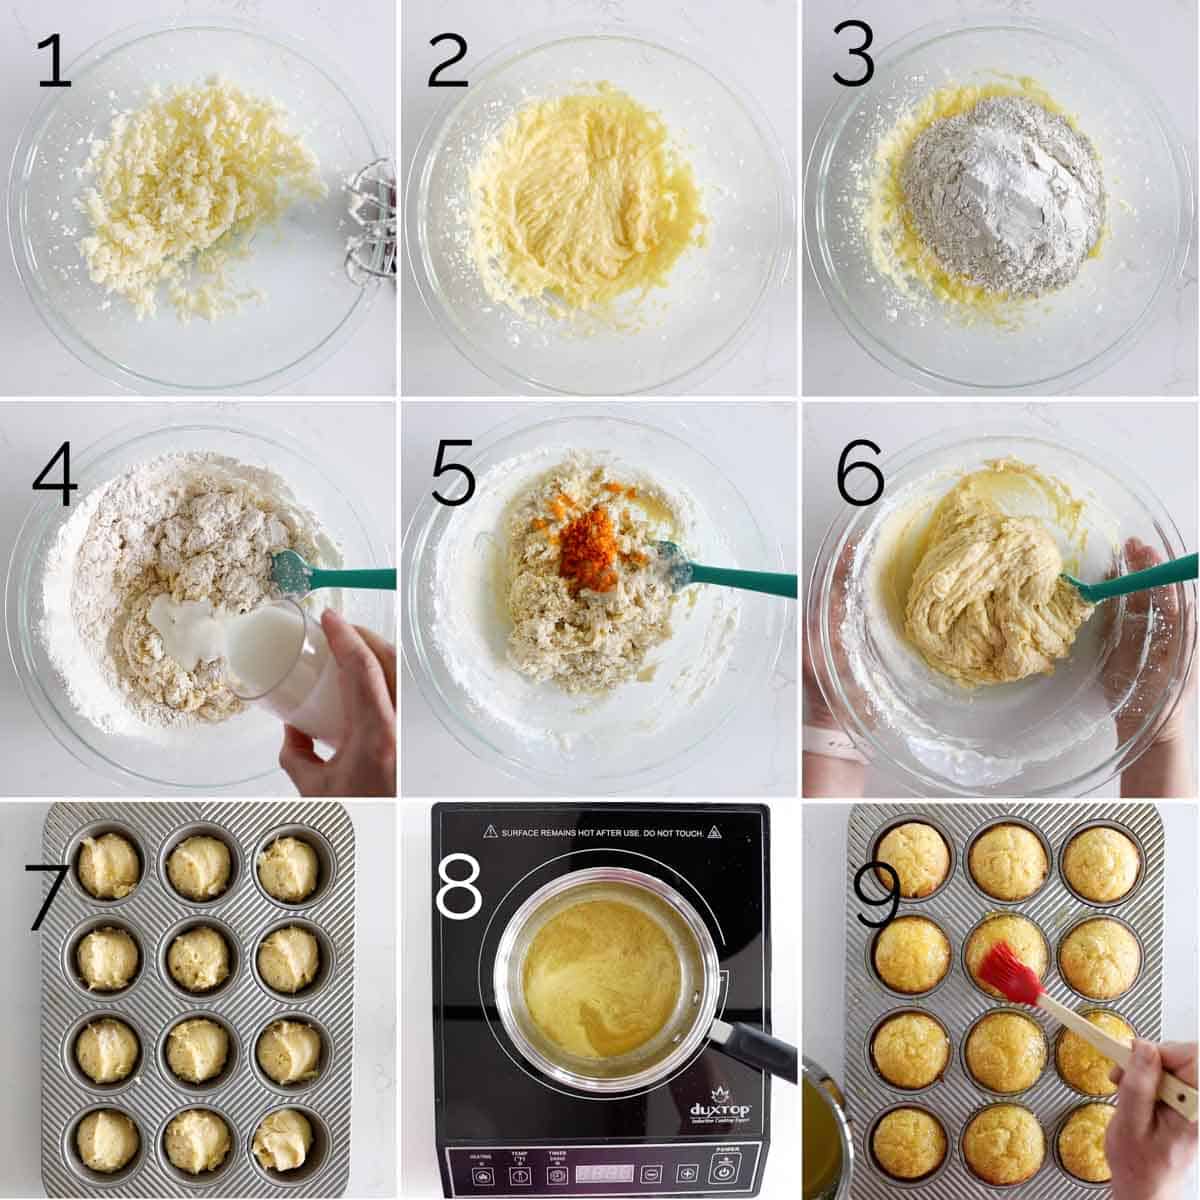 Steps to make orange muffins.